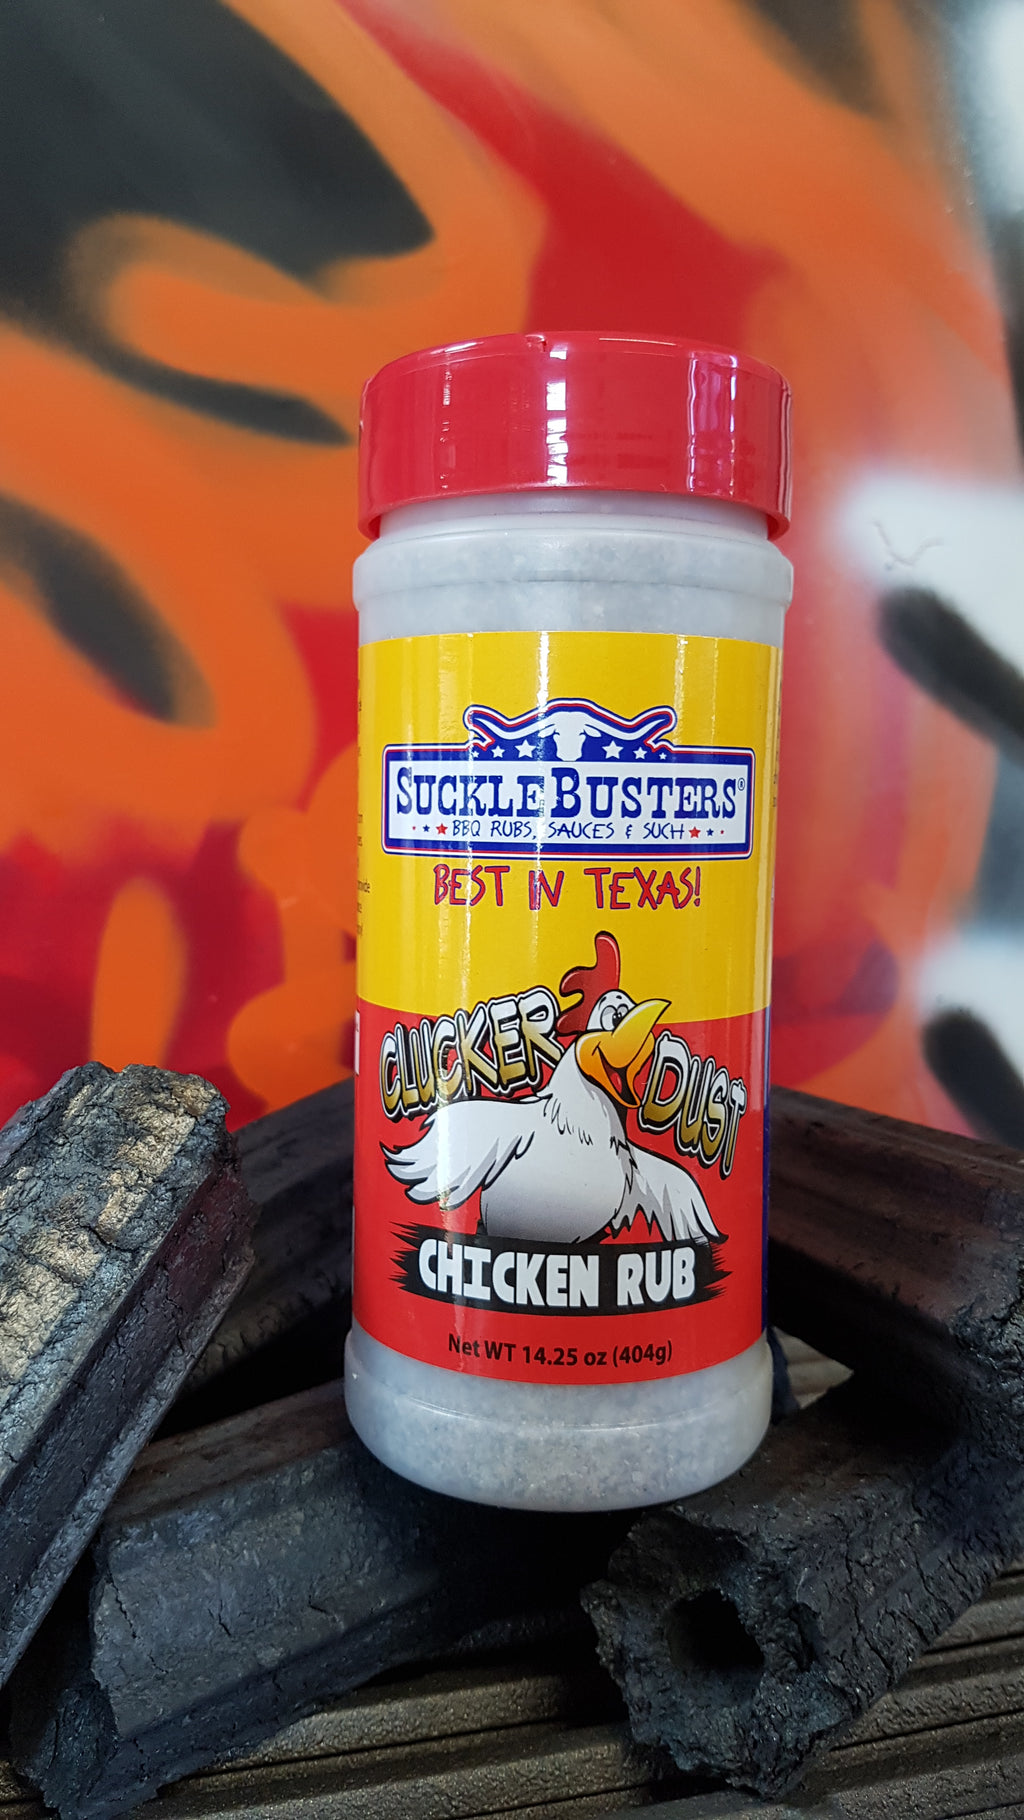 Clucker Dust Chicken Rub 404g by Sucklebusters